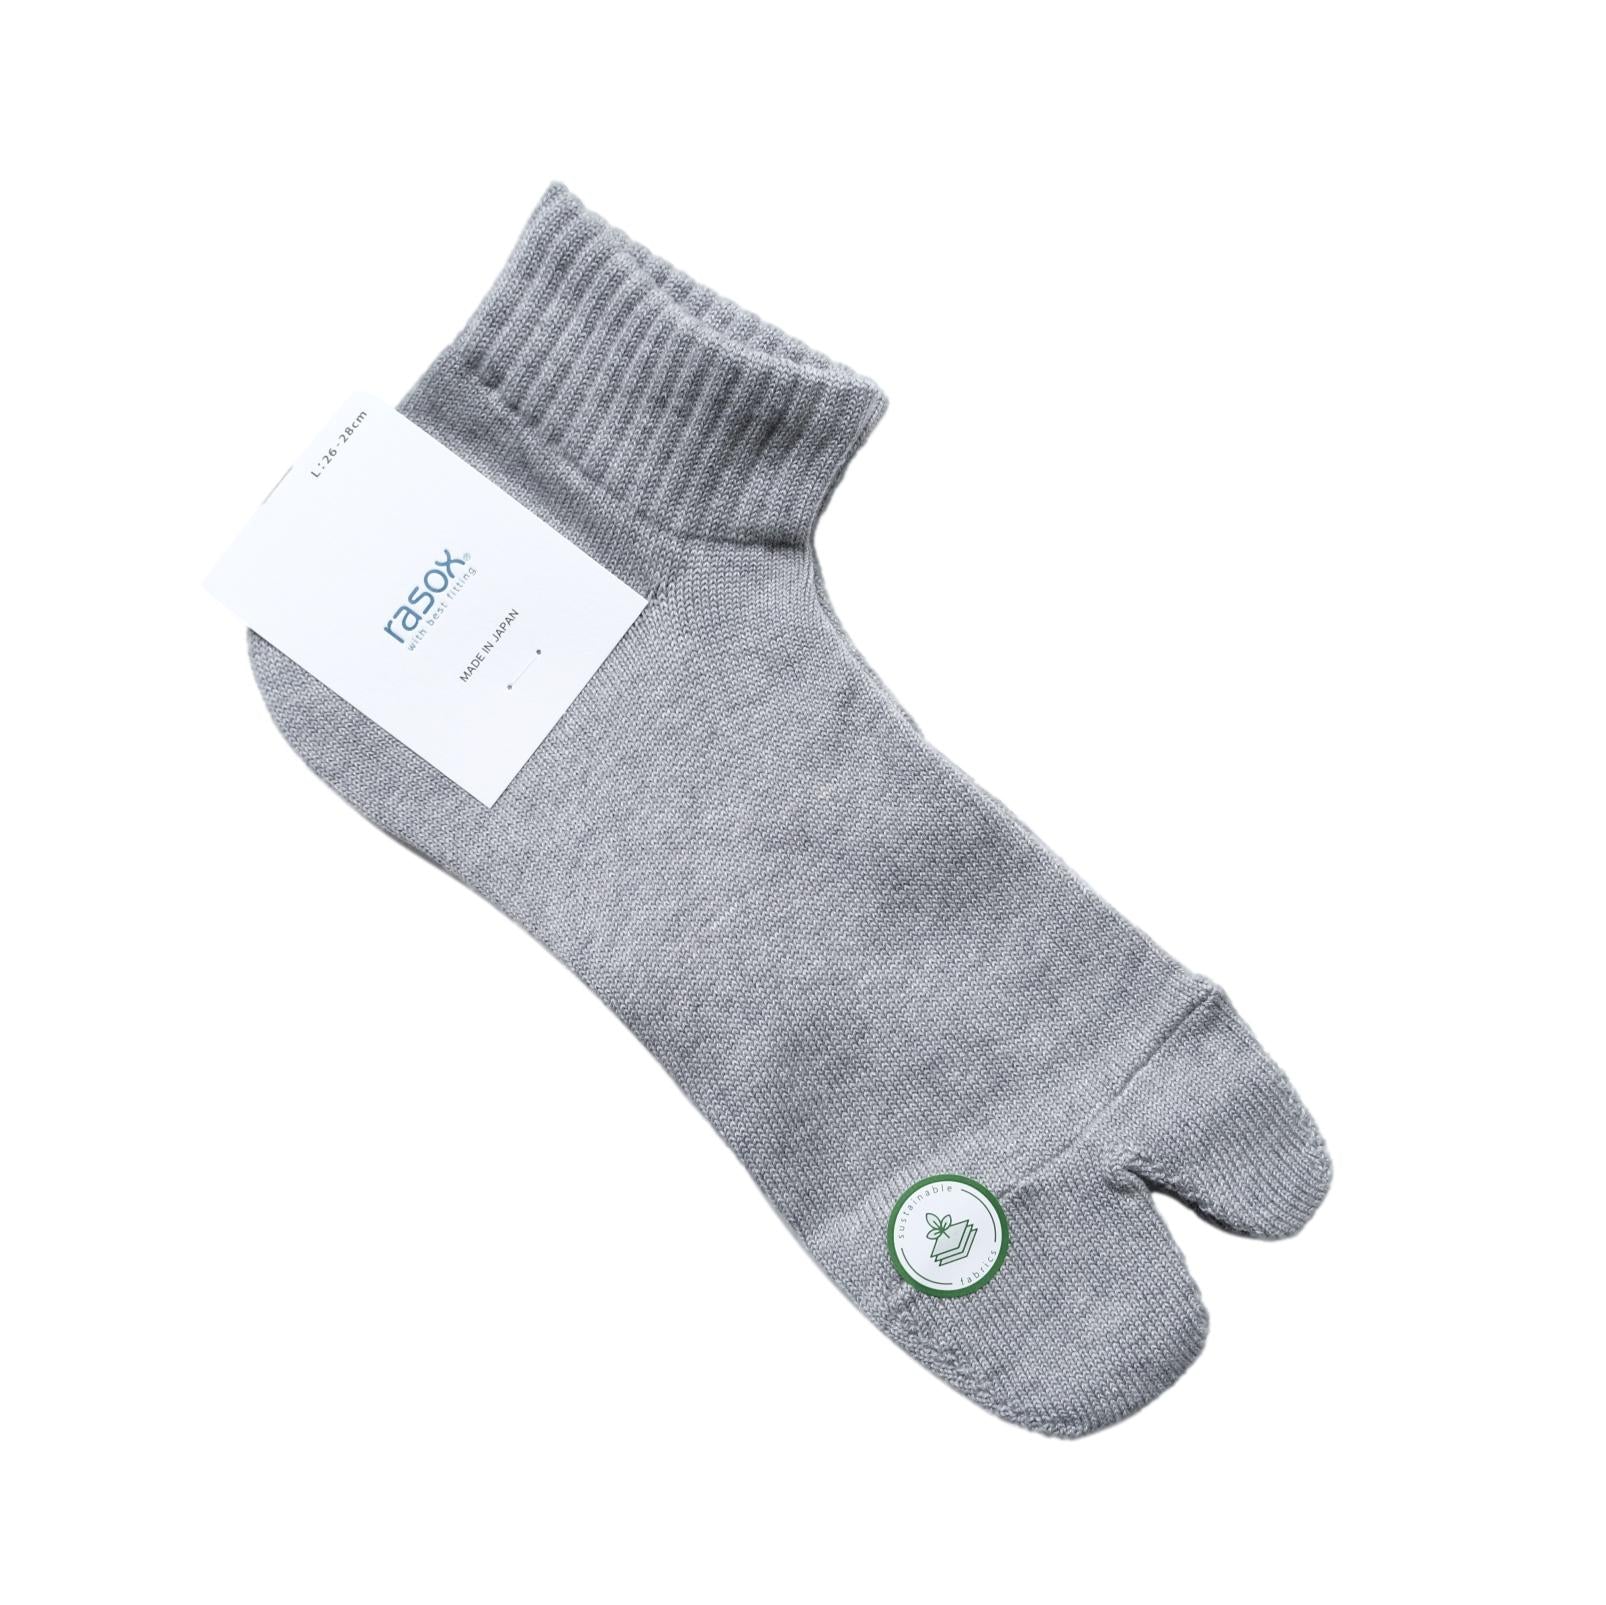 Rasox Eco Feel Tabi Socks (Gray) - Okayama Denim